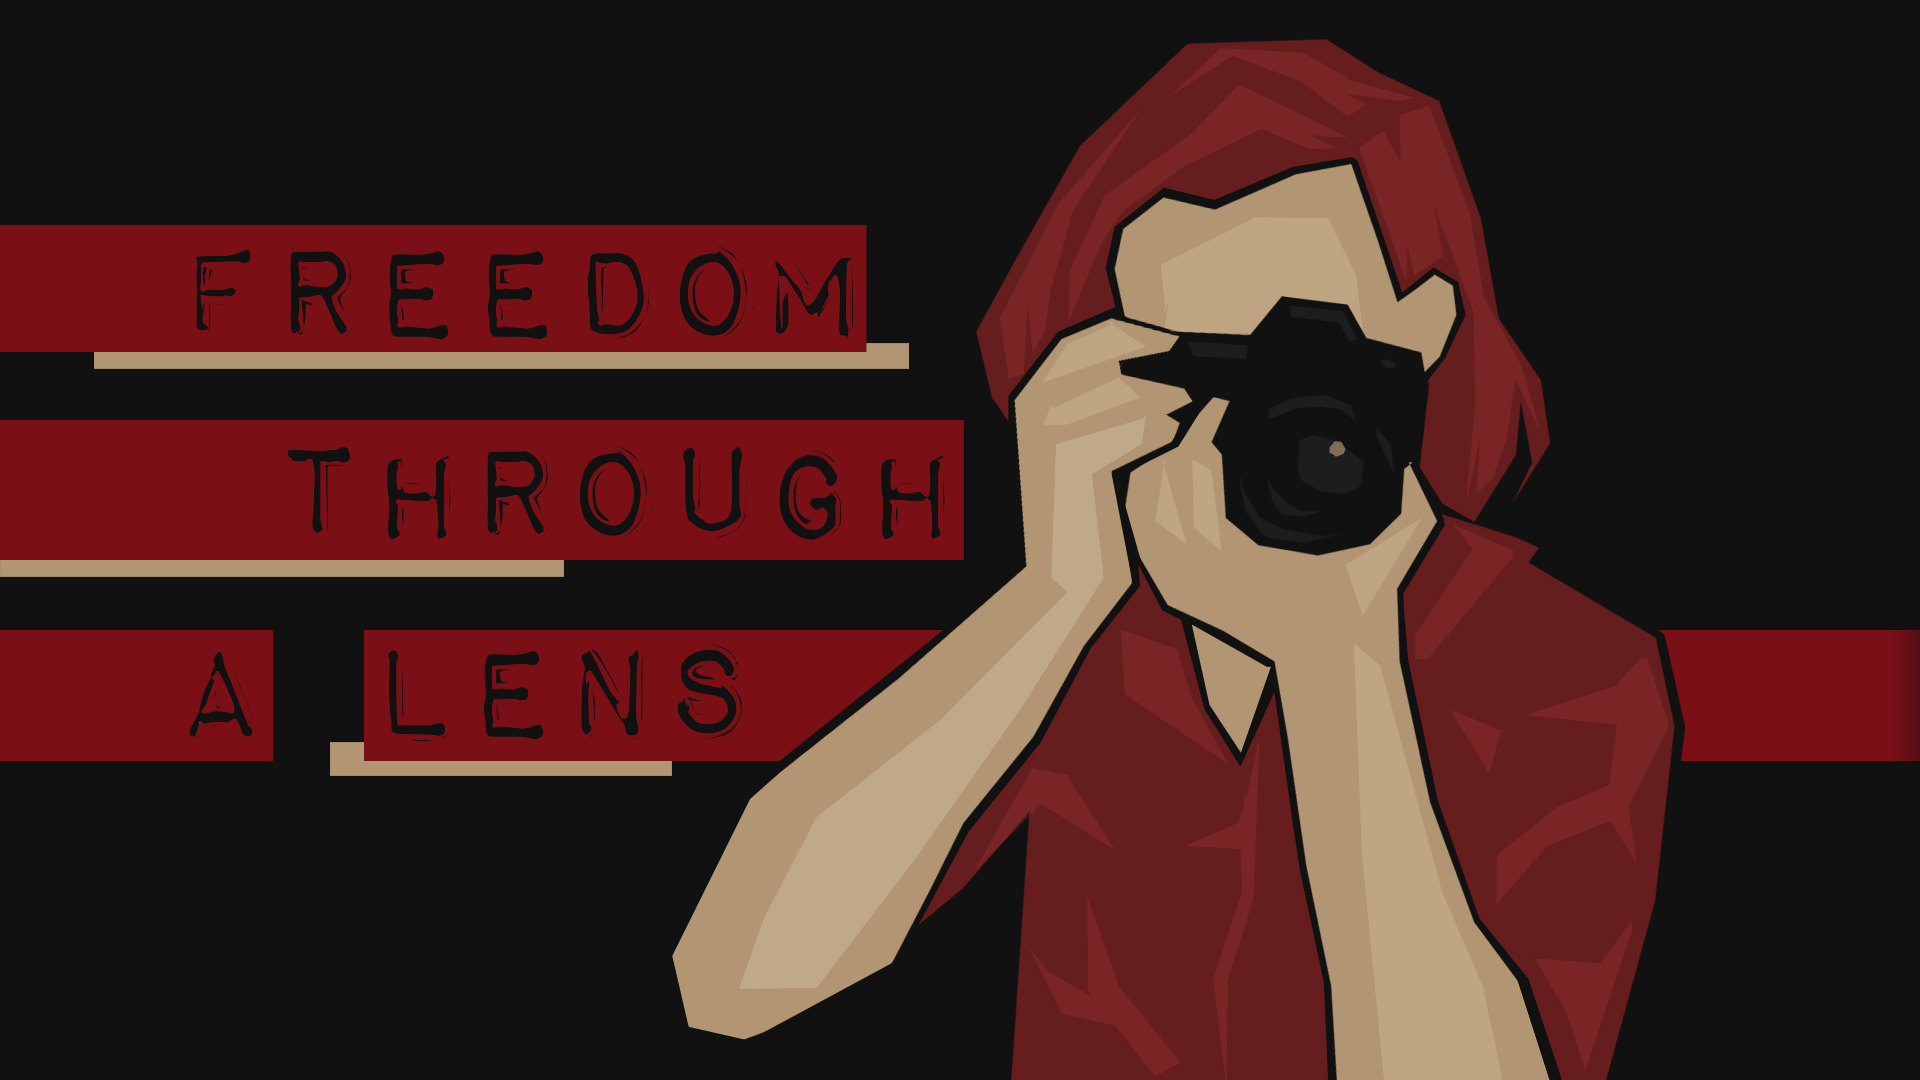 Freedom Through A Lens